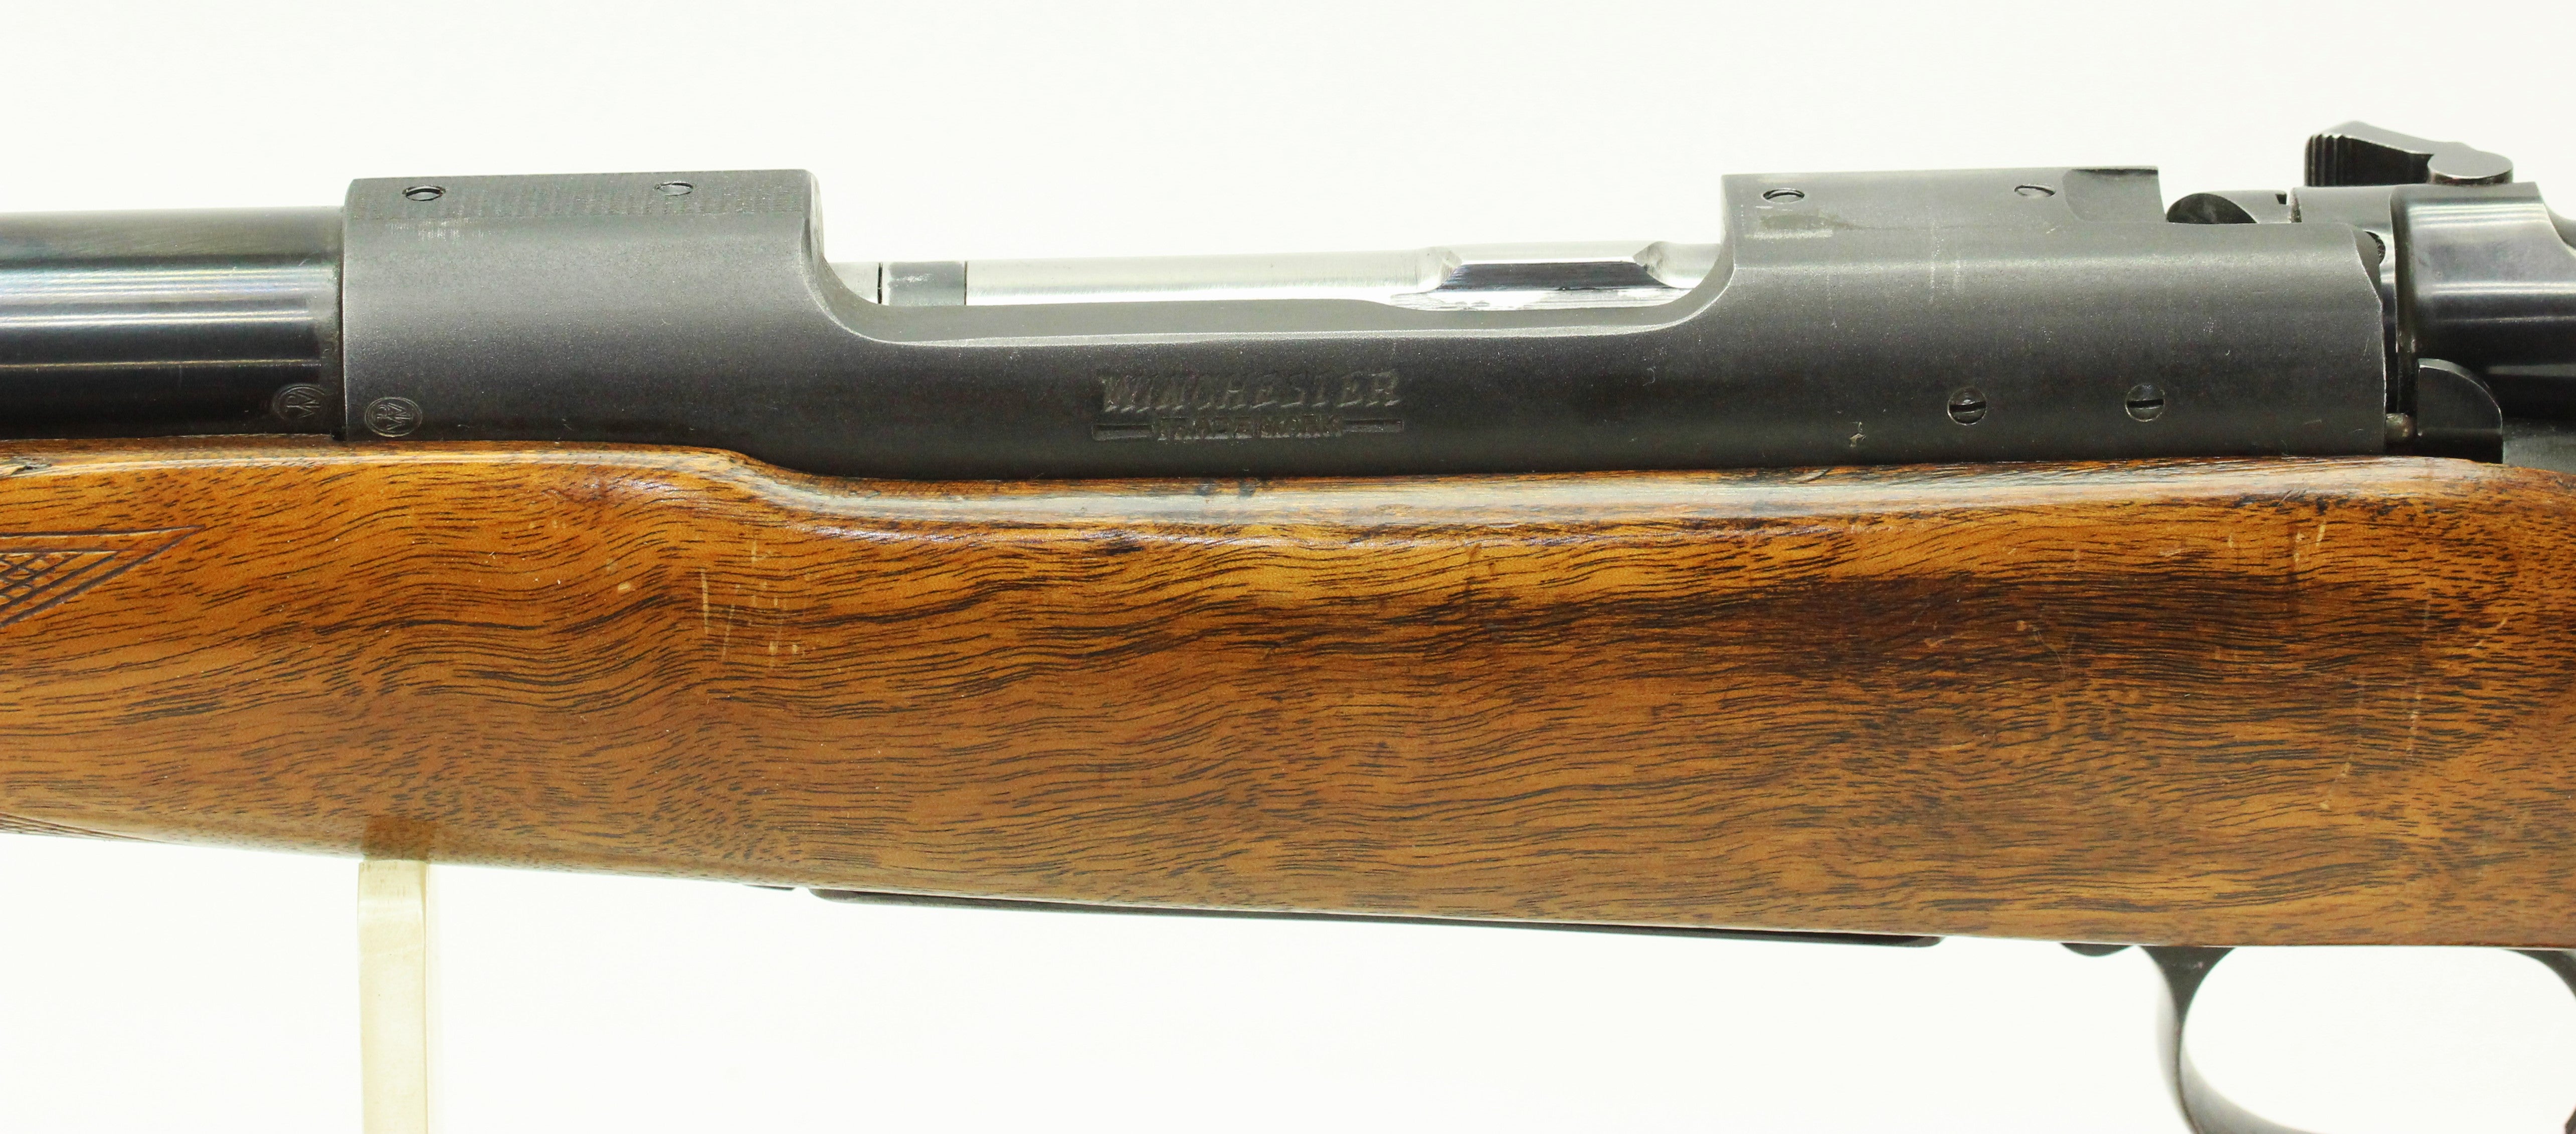 .270 Win Standard Rifle - 1951